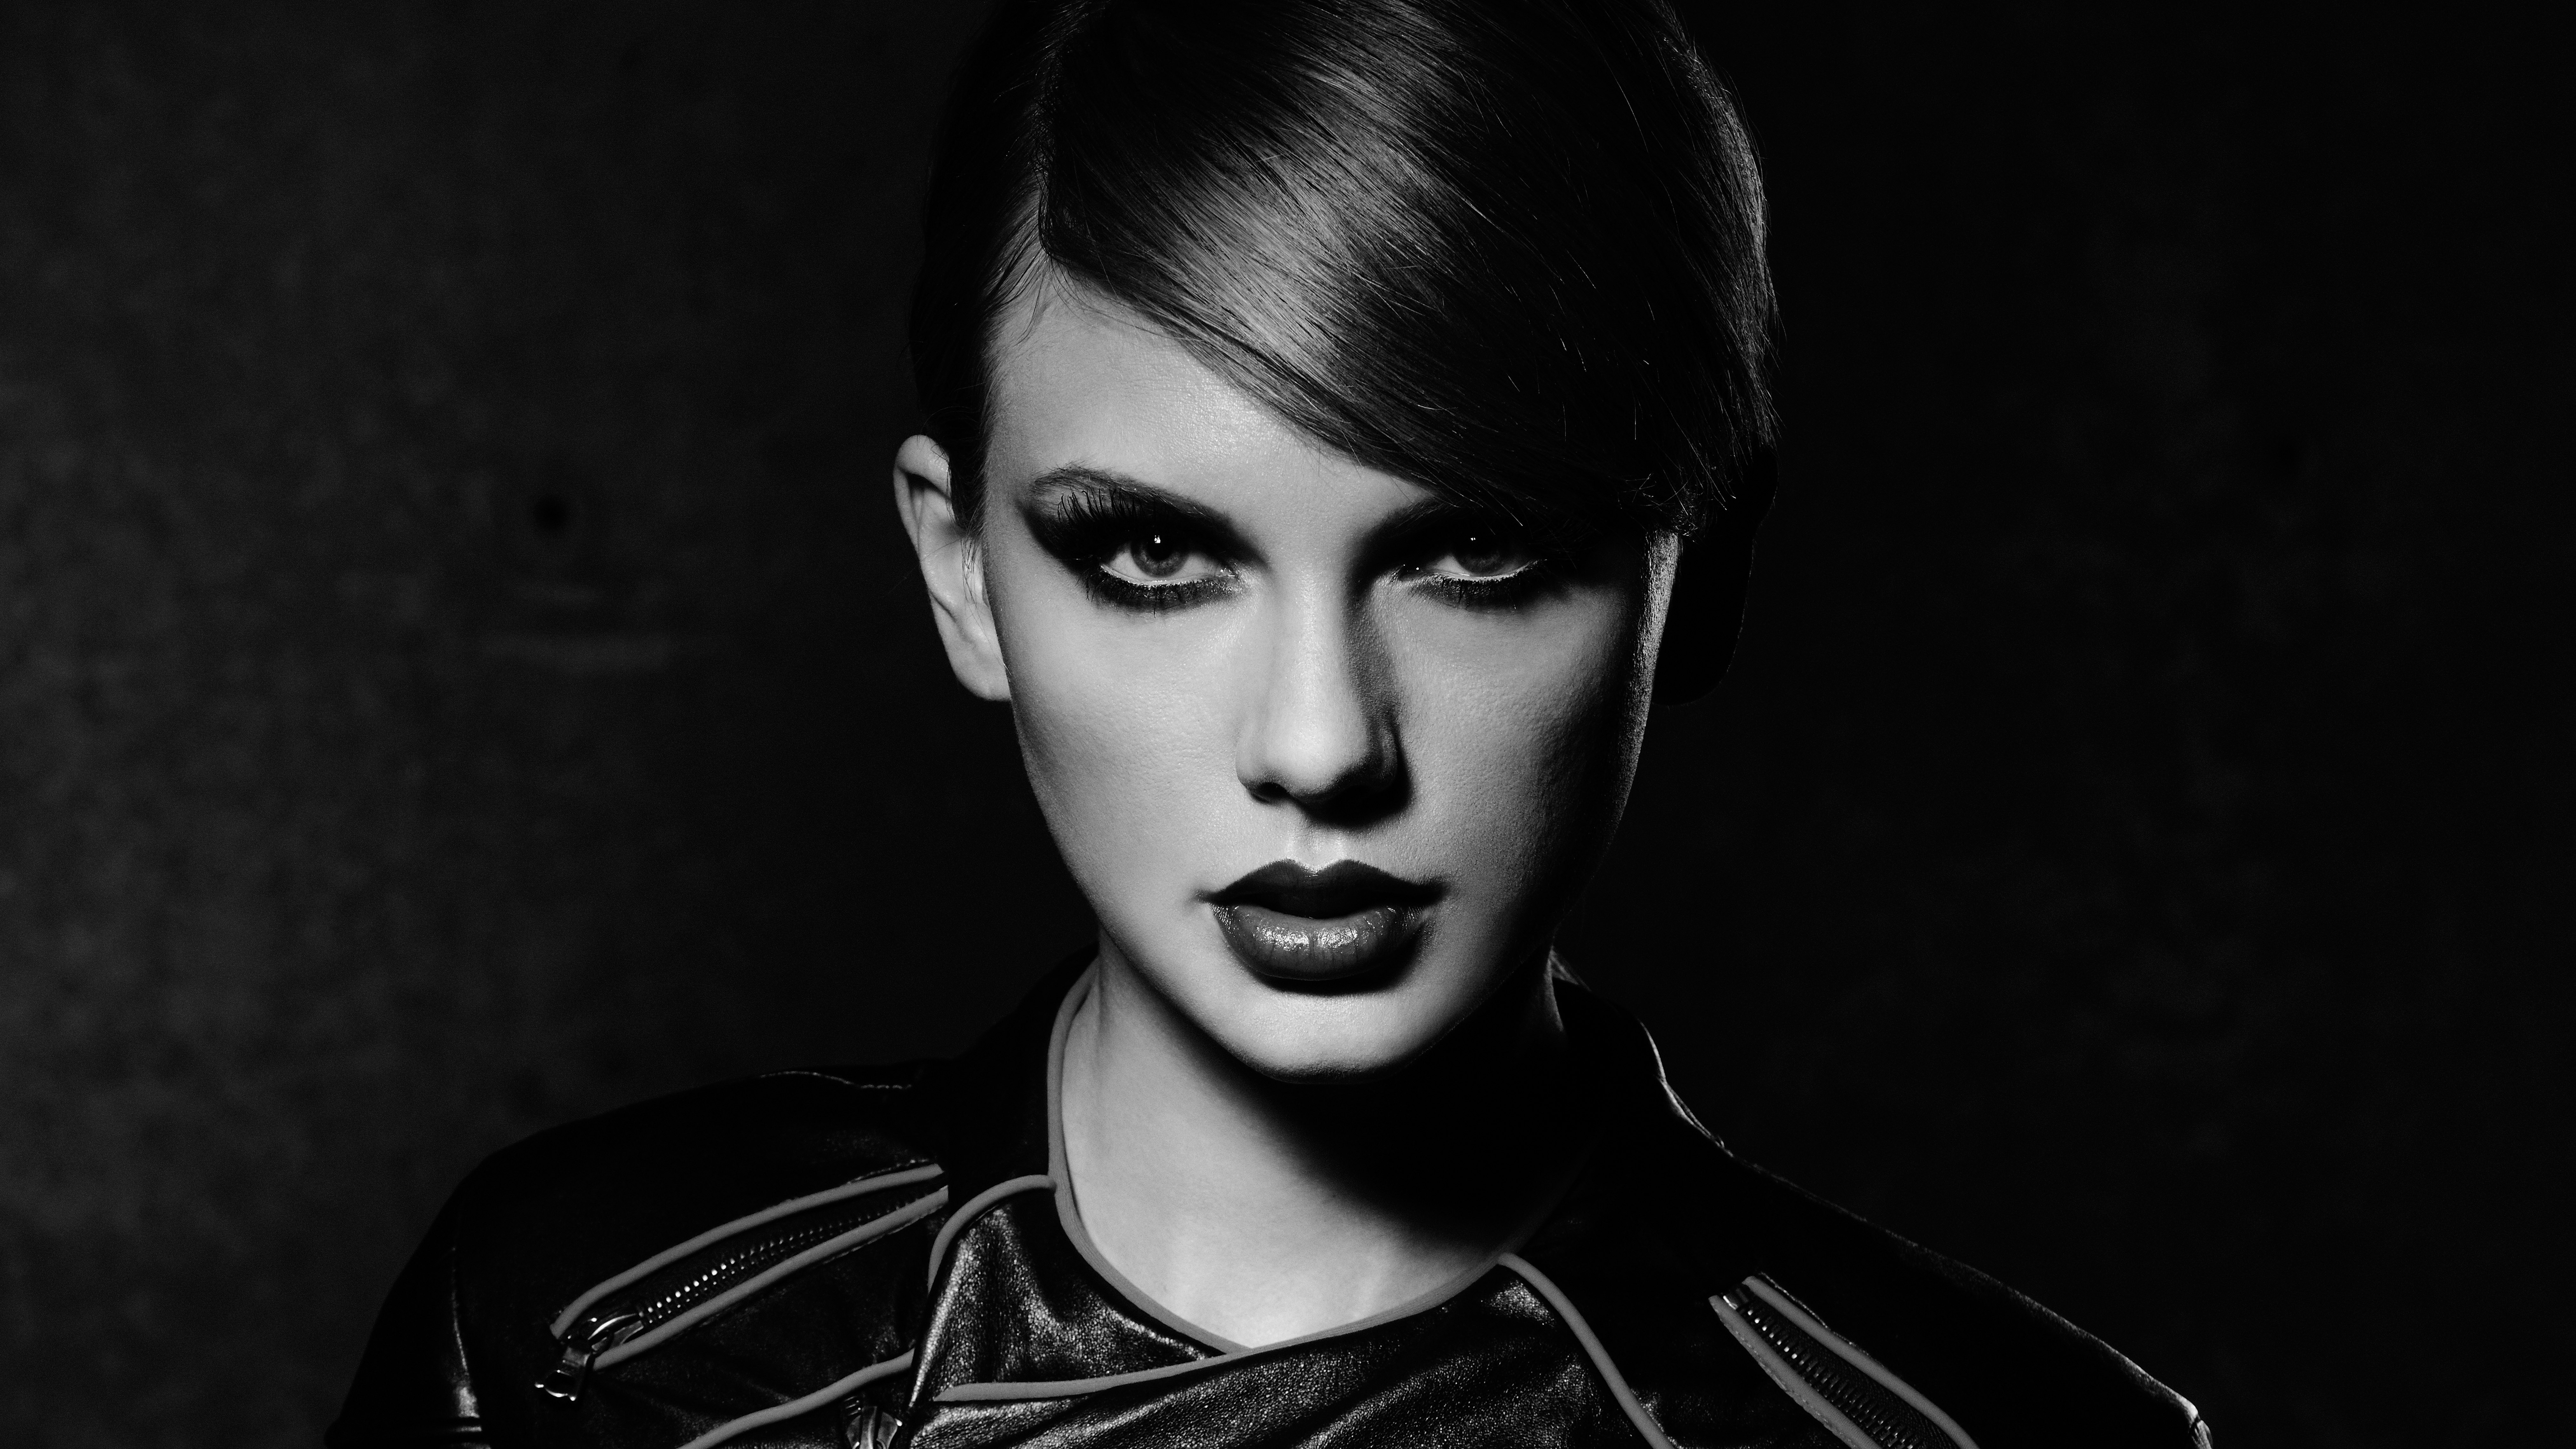 Wallpapers Taylor Swift monochrome face portrait on the desktop